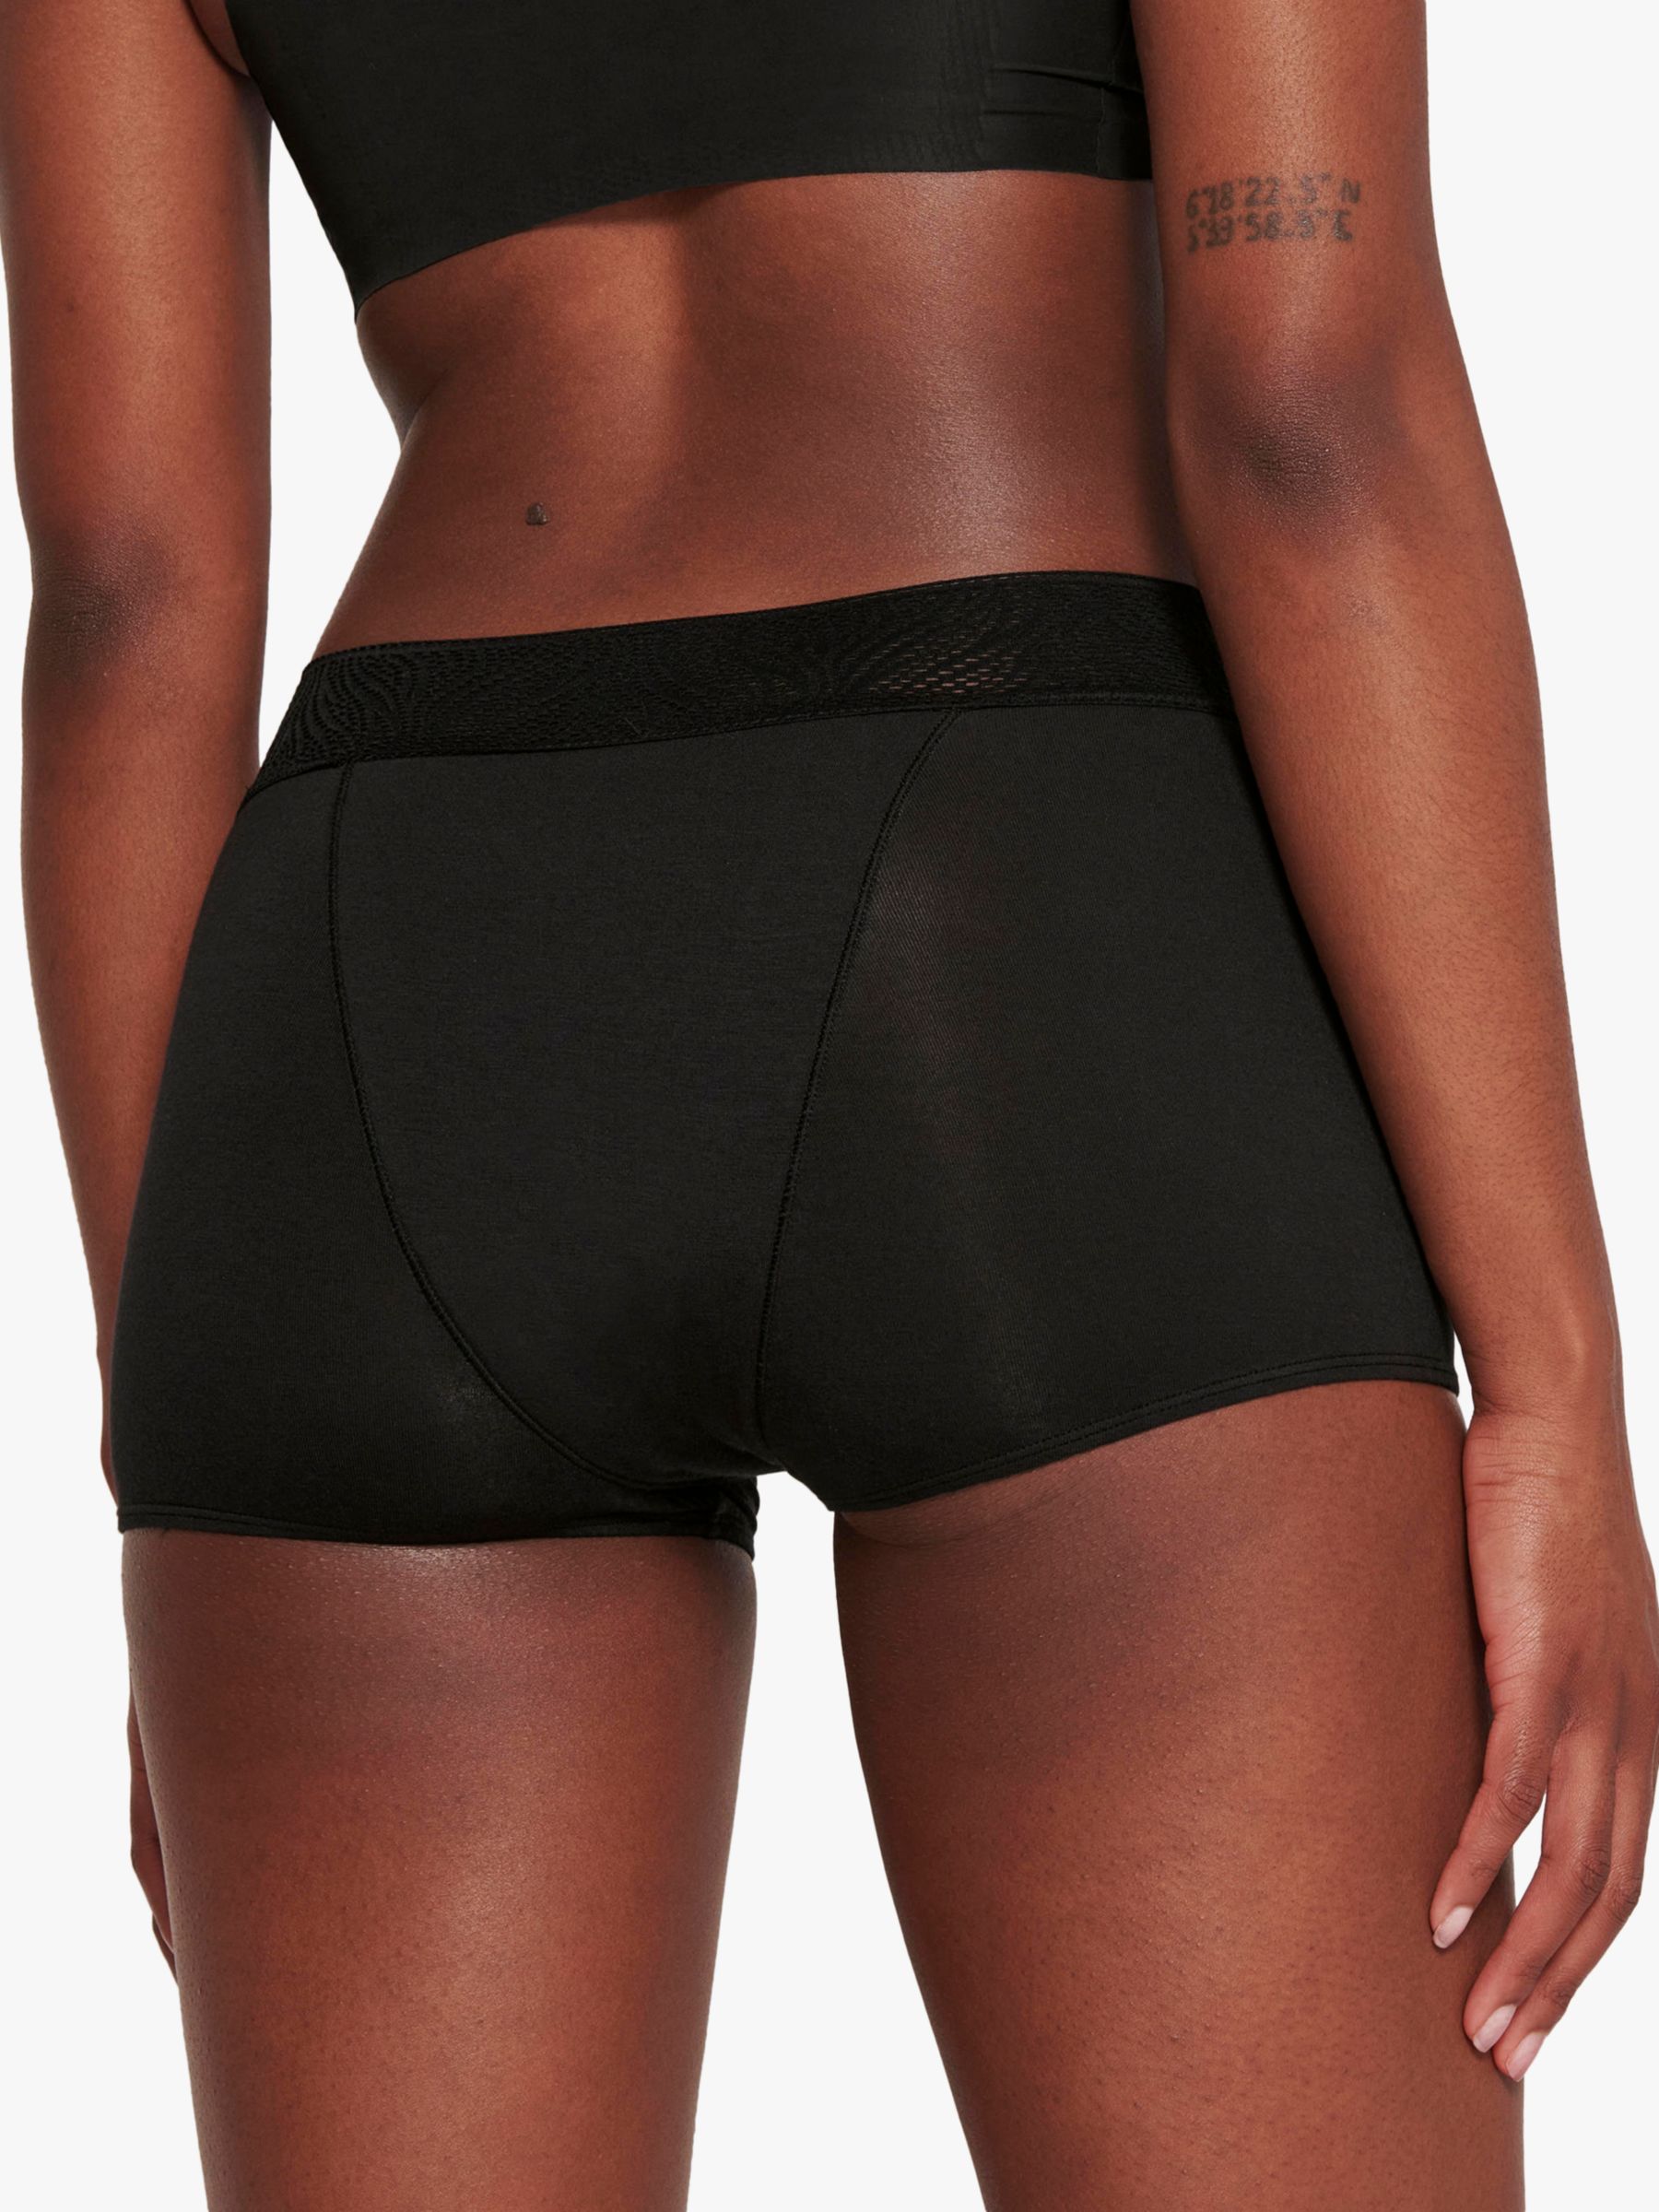 sloggi Medium Absorbency Shorts Period Knickers, Pack of 2, Black, L